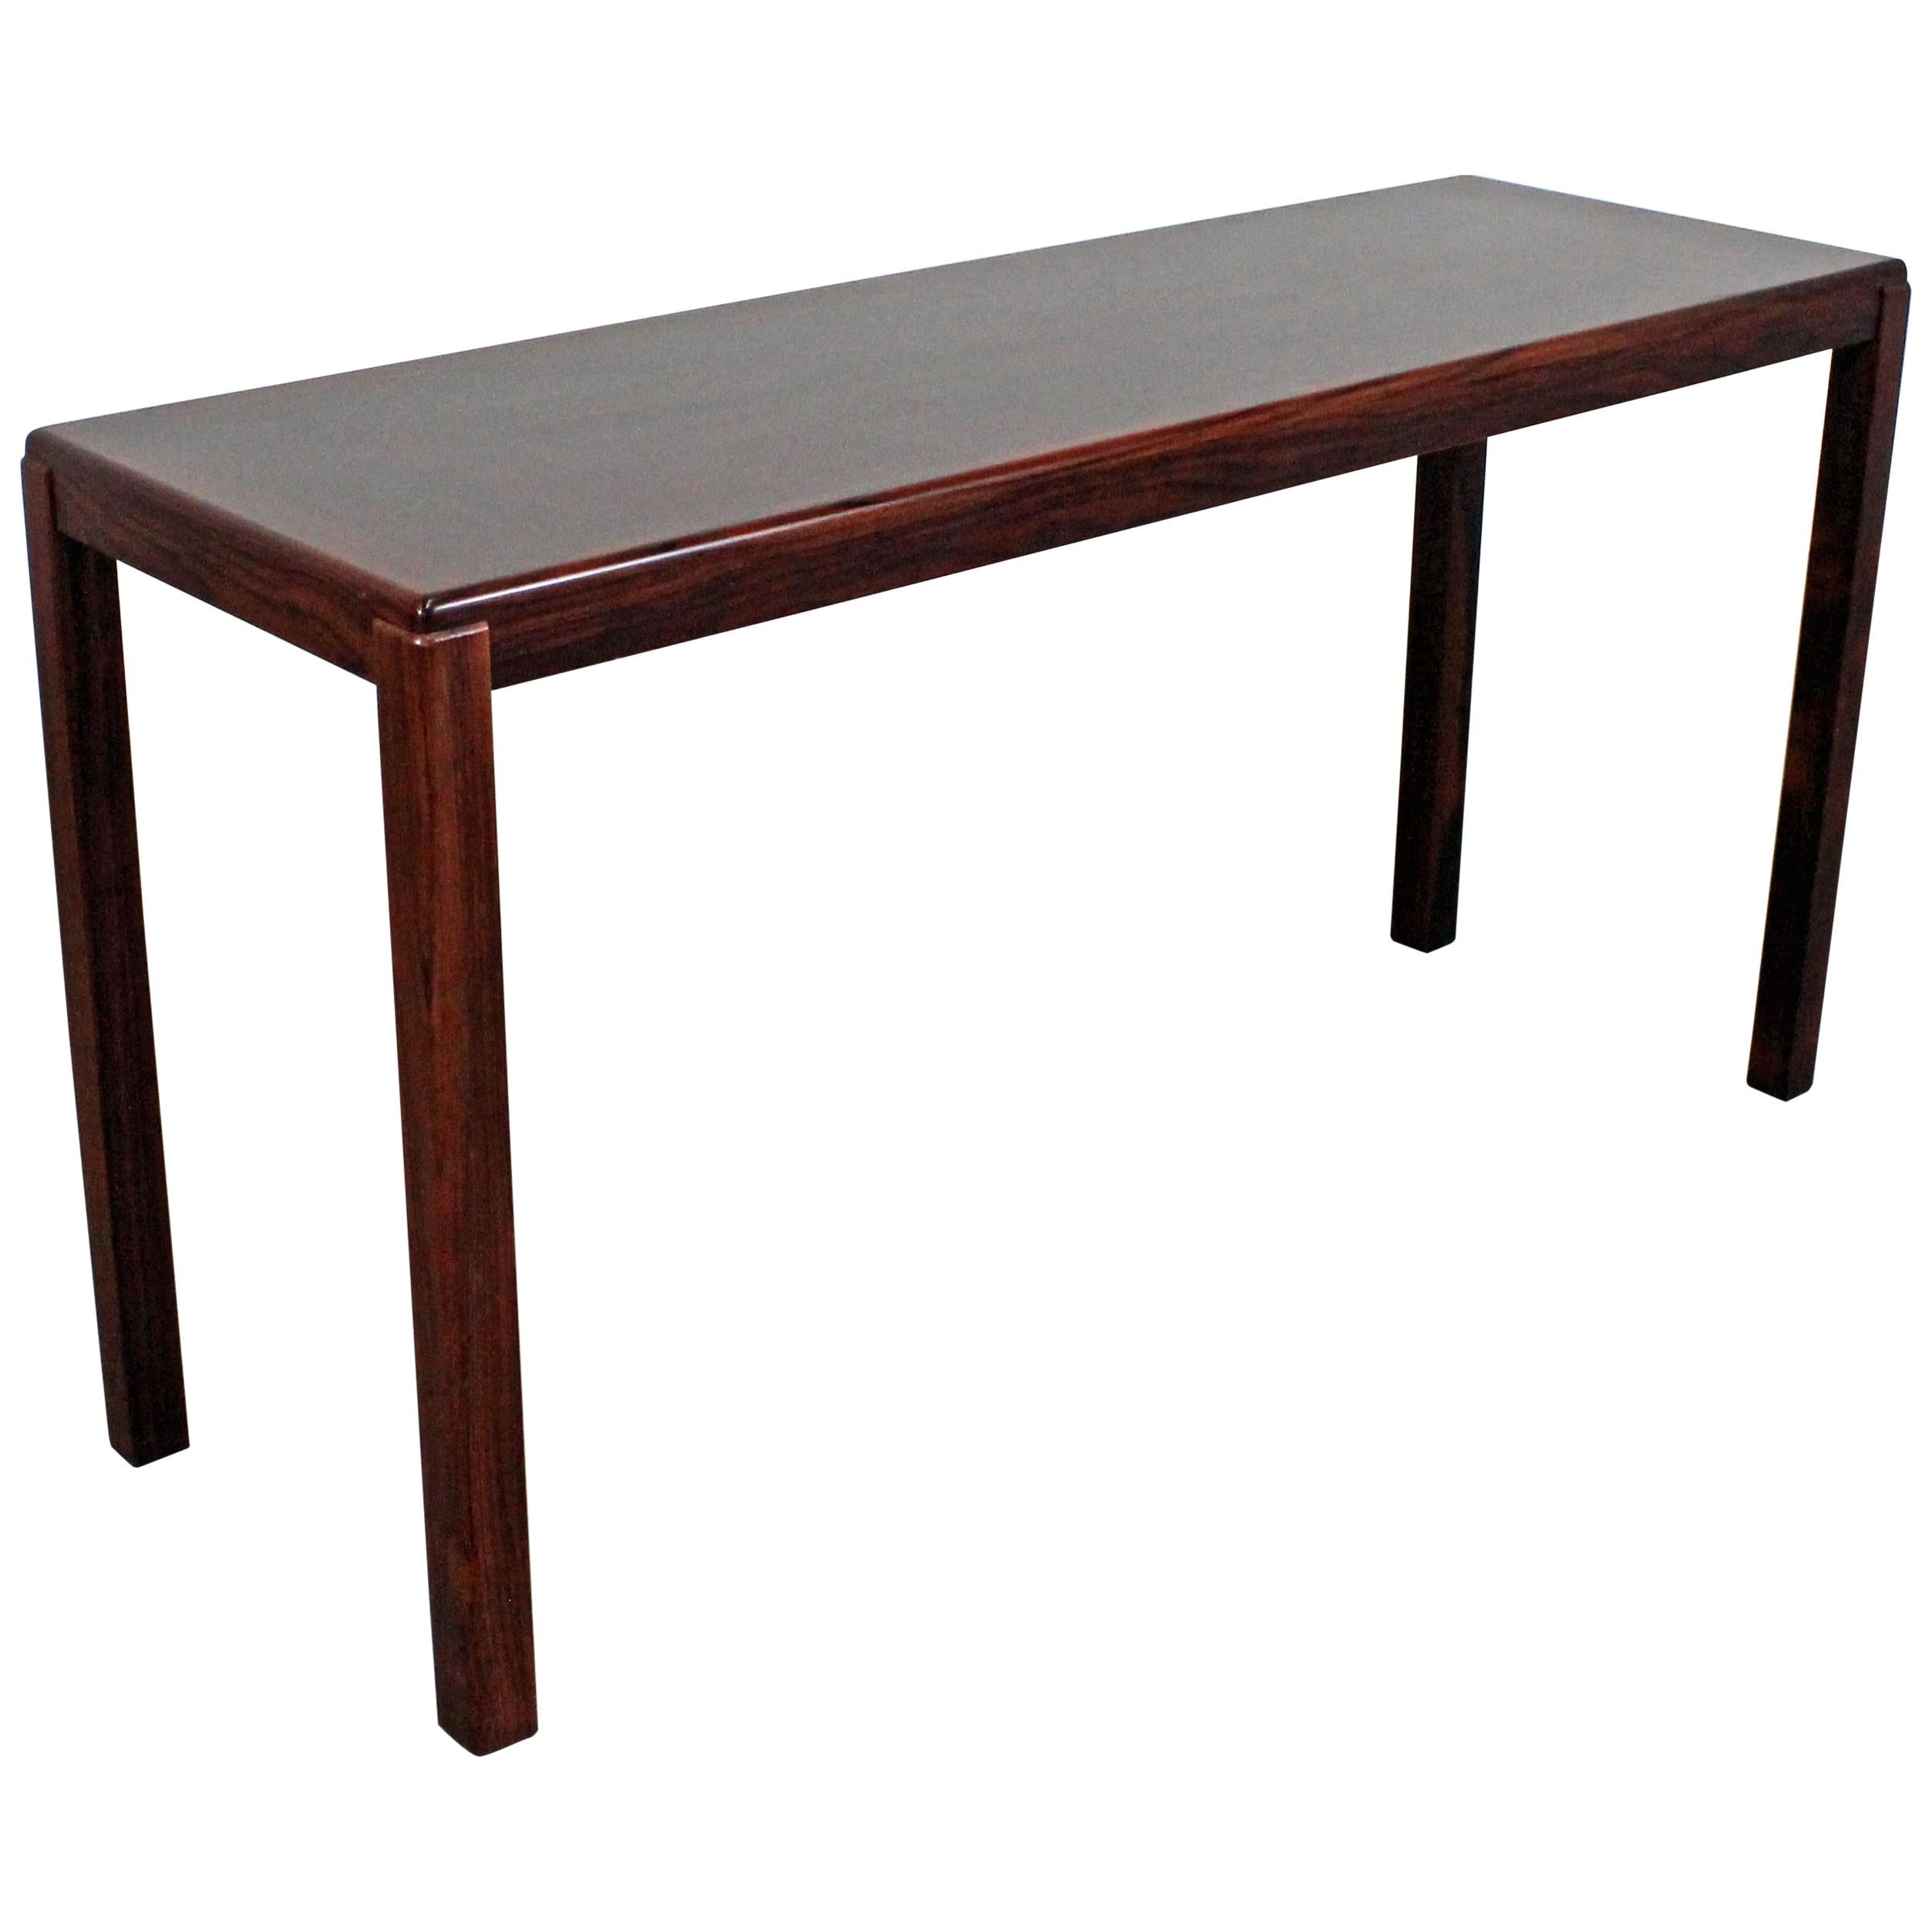 Midcentury Danish Modern Vejle Stole Parquet Top Rosewood Console Table